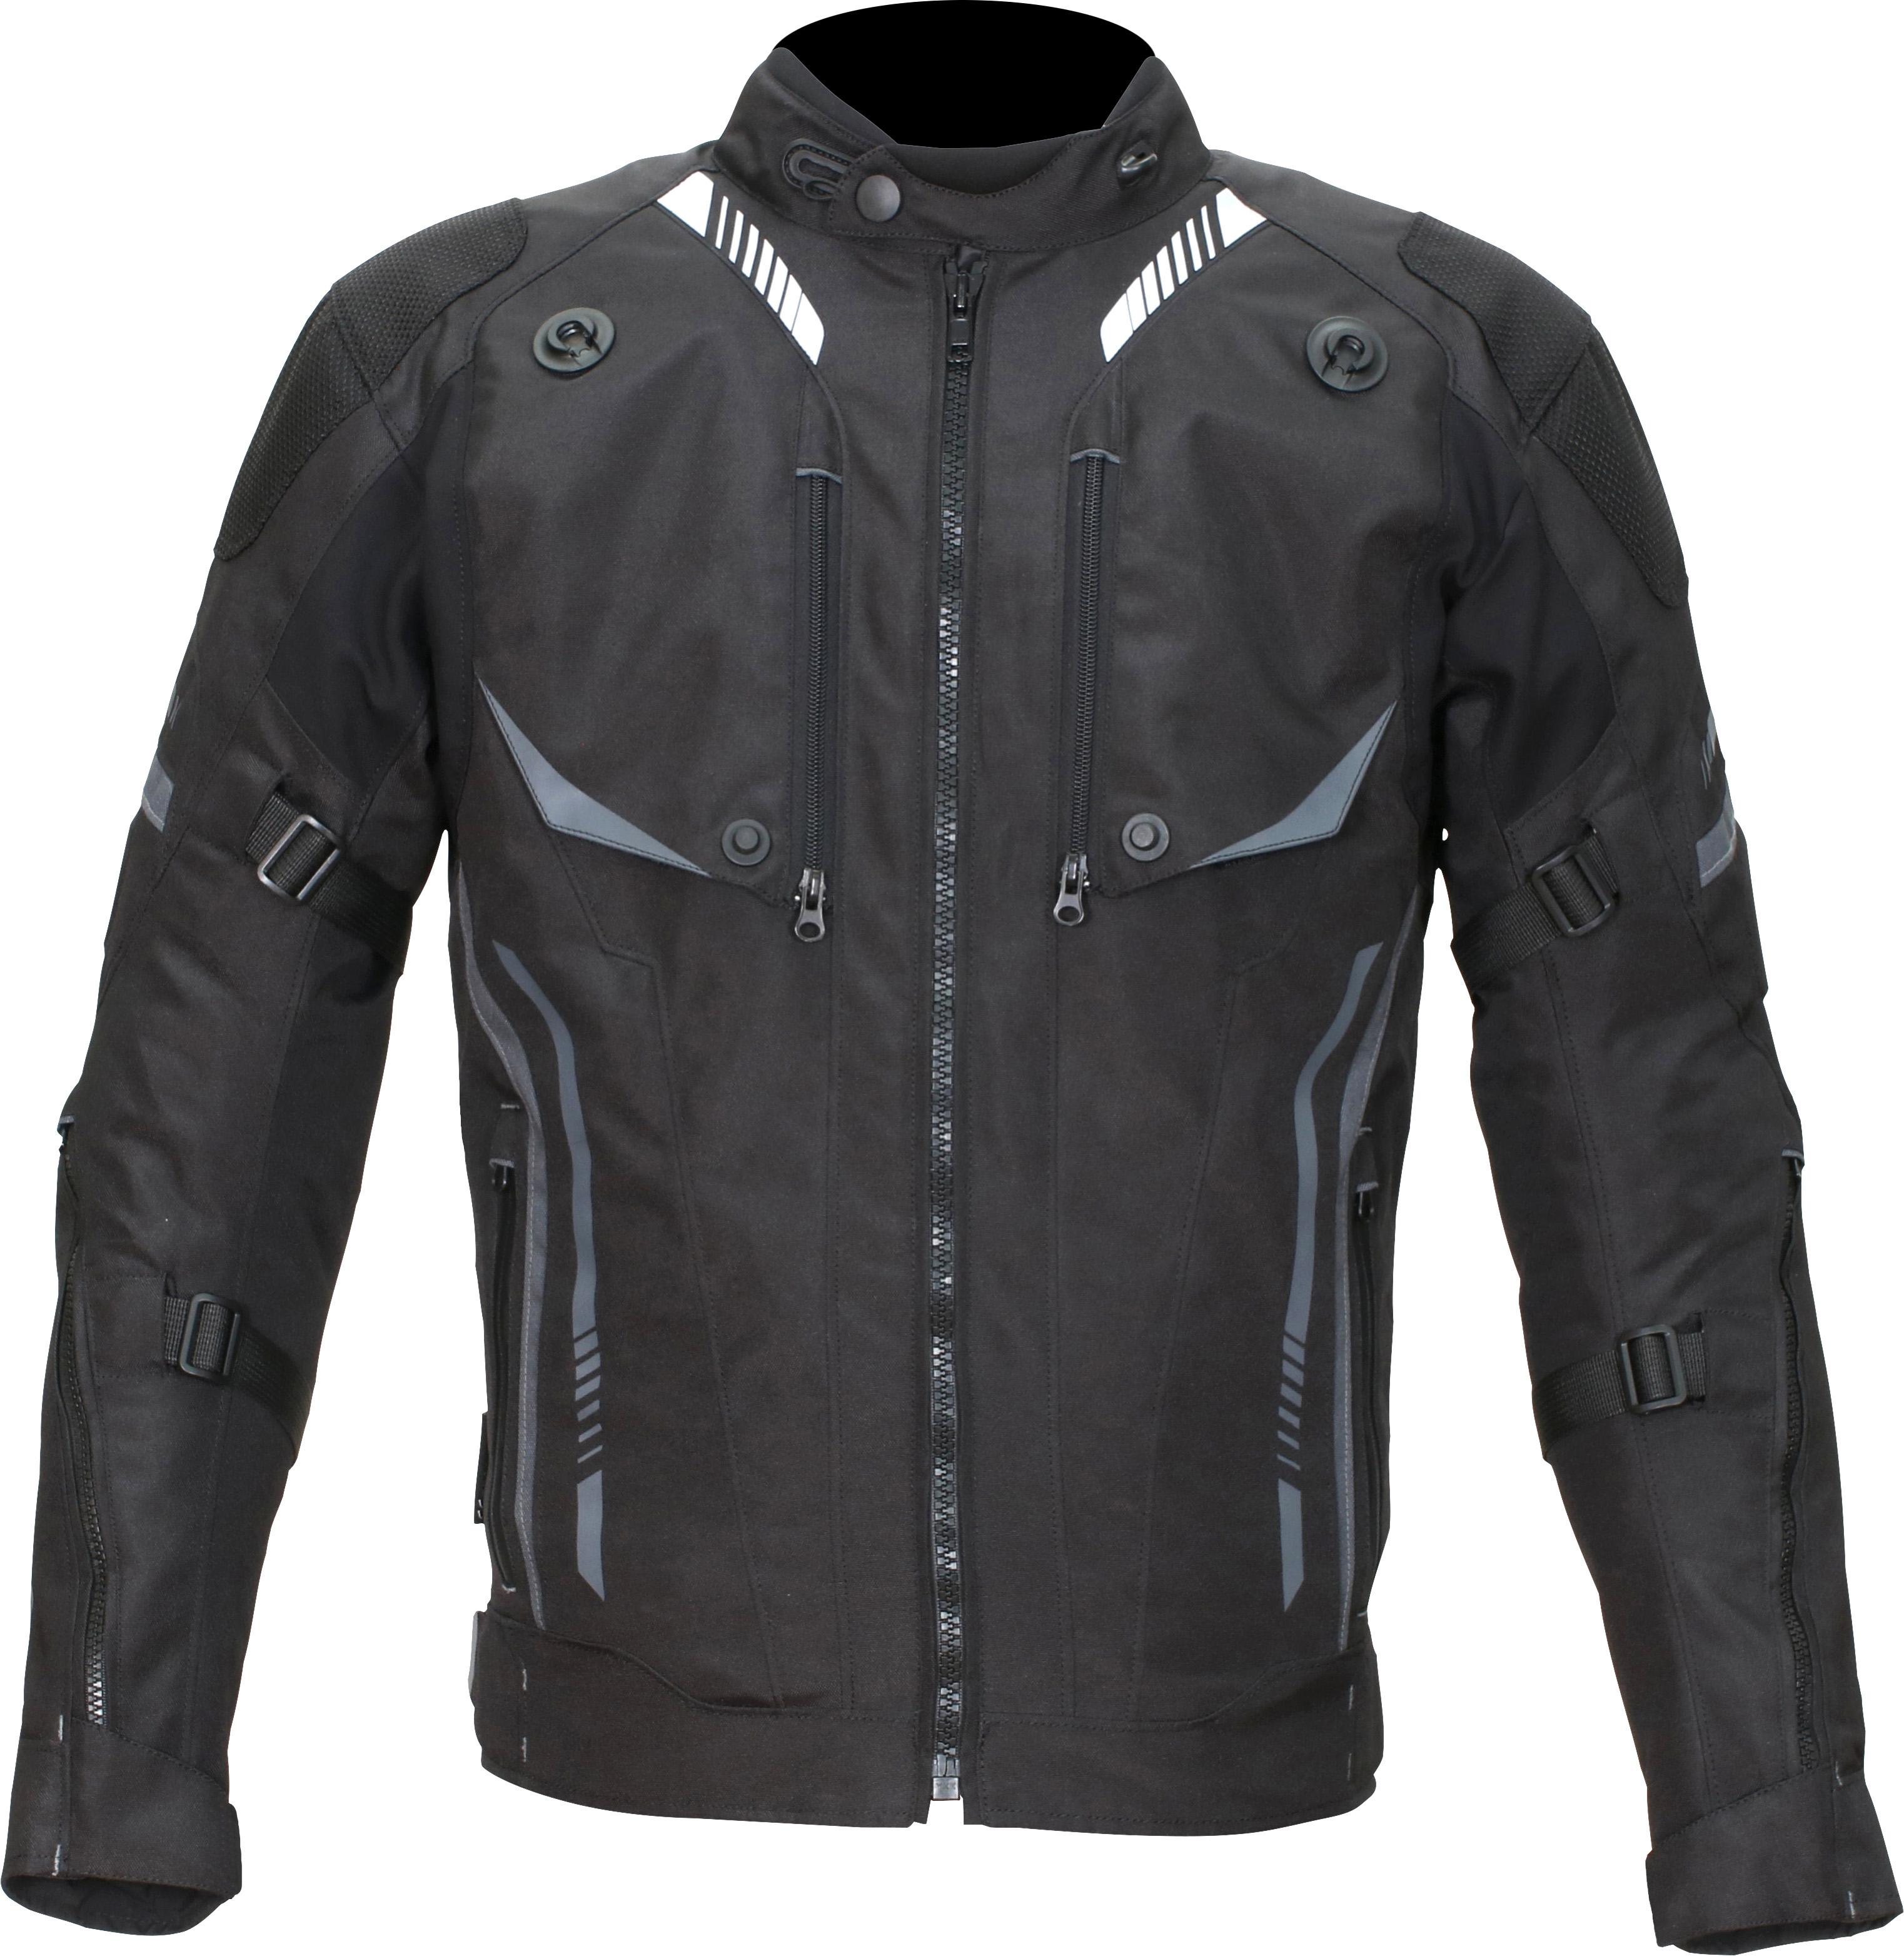 Weise Vertex Motorcycle Jacket - Black, 3Xl